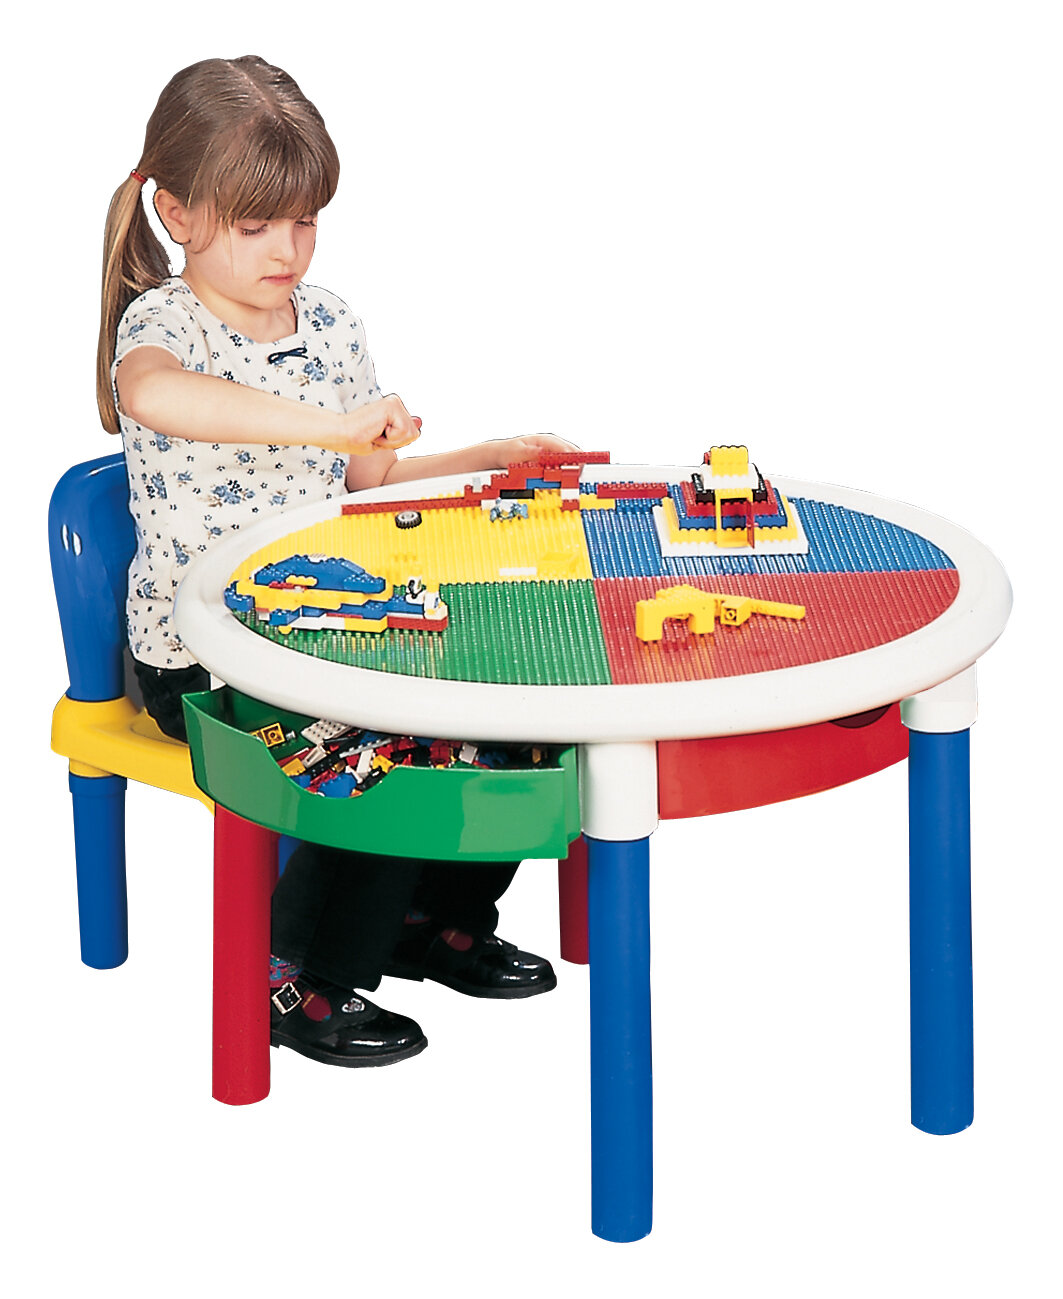 children's activity table